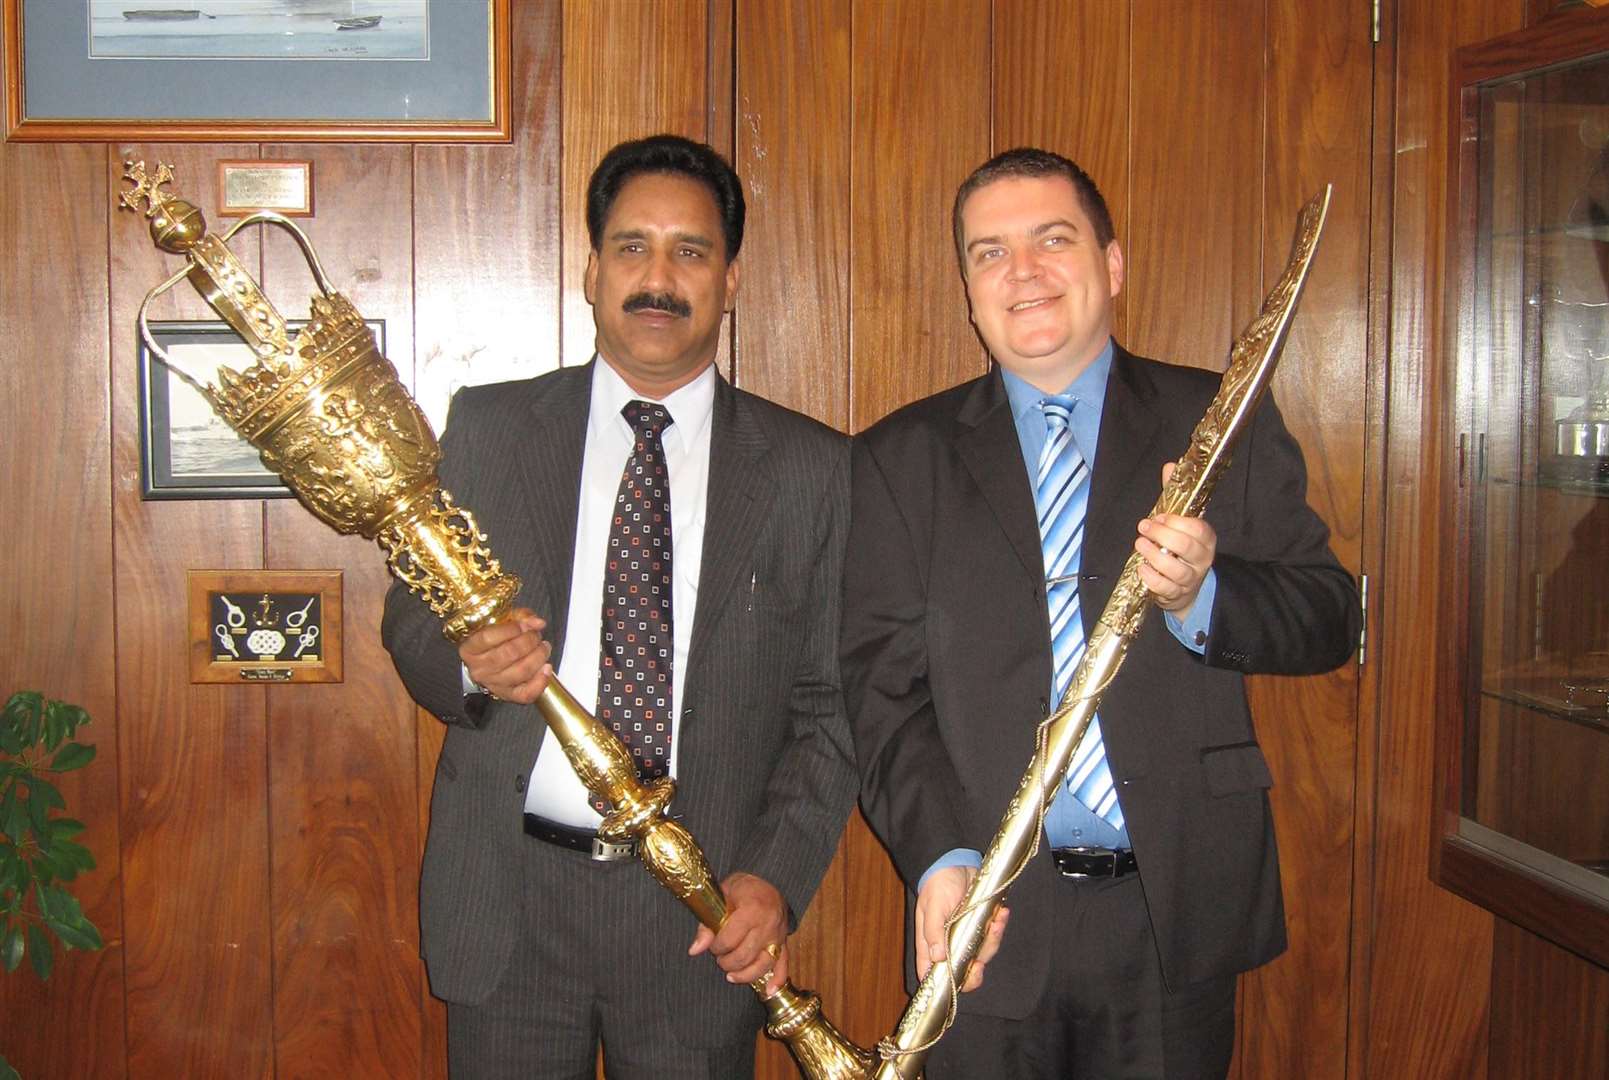 Surinder Kumar Mahey, Mayor of Jalhandar in the Punjab, meets Ray Parker, Mayor of Gravesham